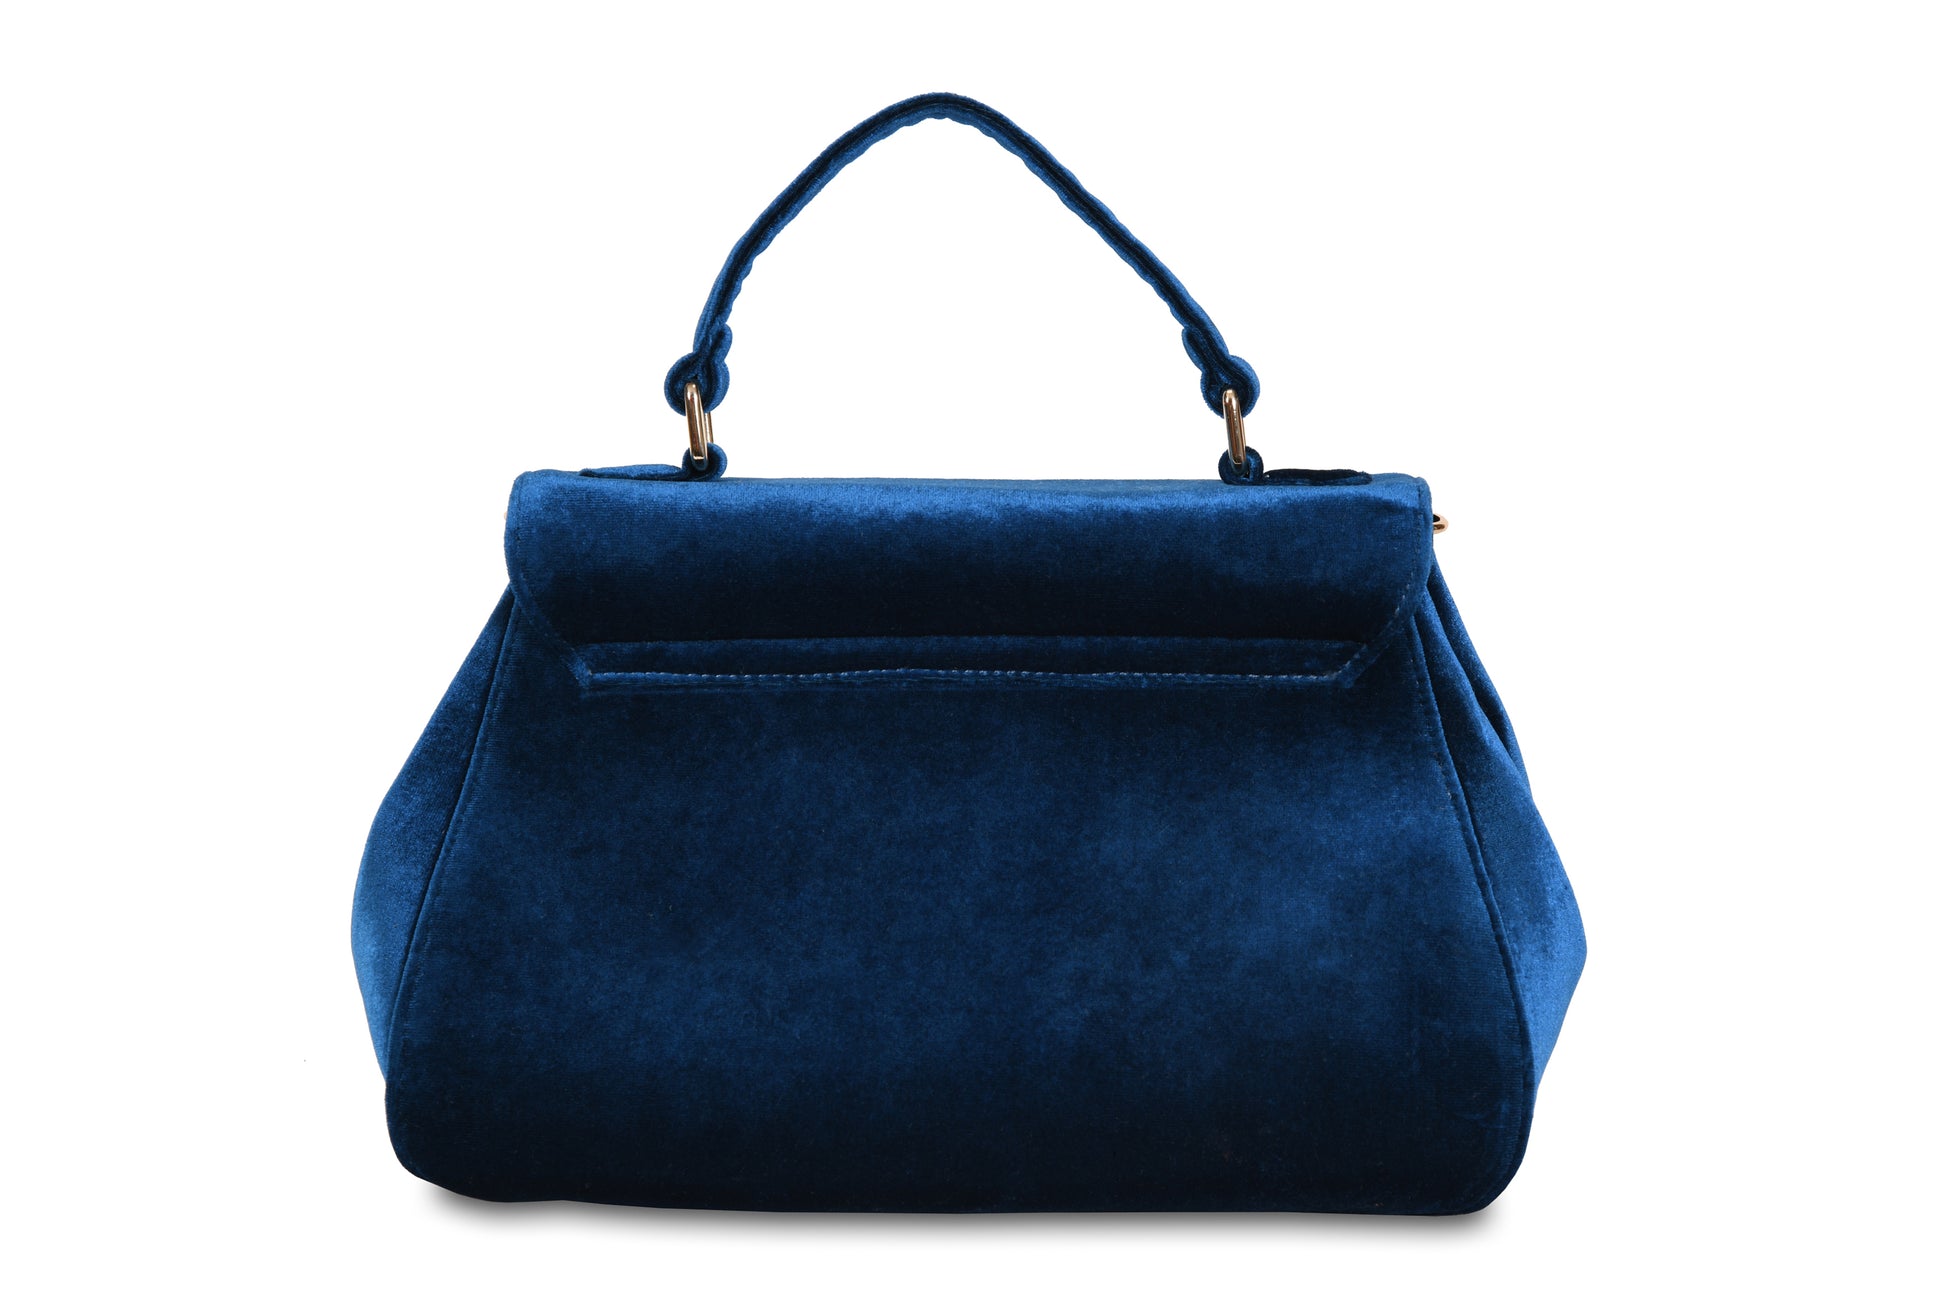 Charlotte Dark Blue Velvet Handbag made by Dewi Maya back view available at the best boutique in Upstate South Carolina Spartanburg Greenville Dewi Maya Boutique